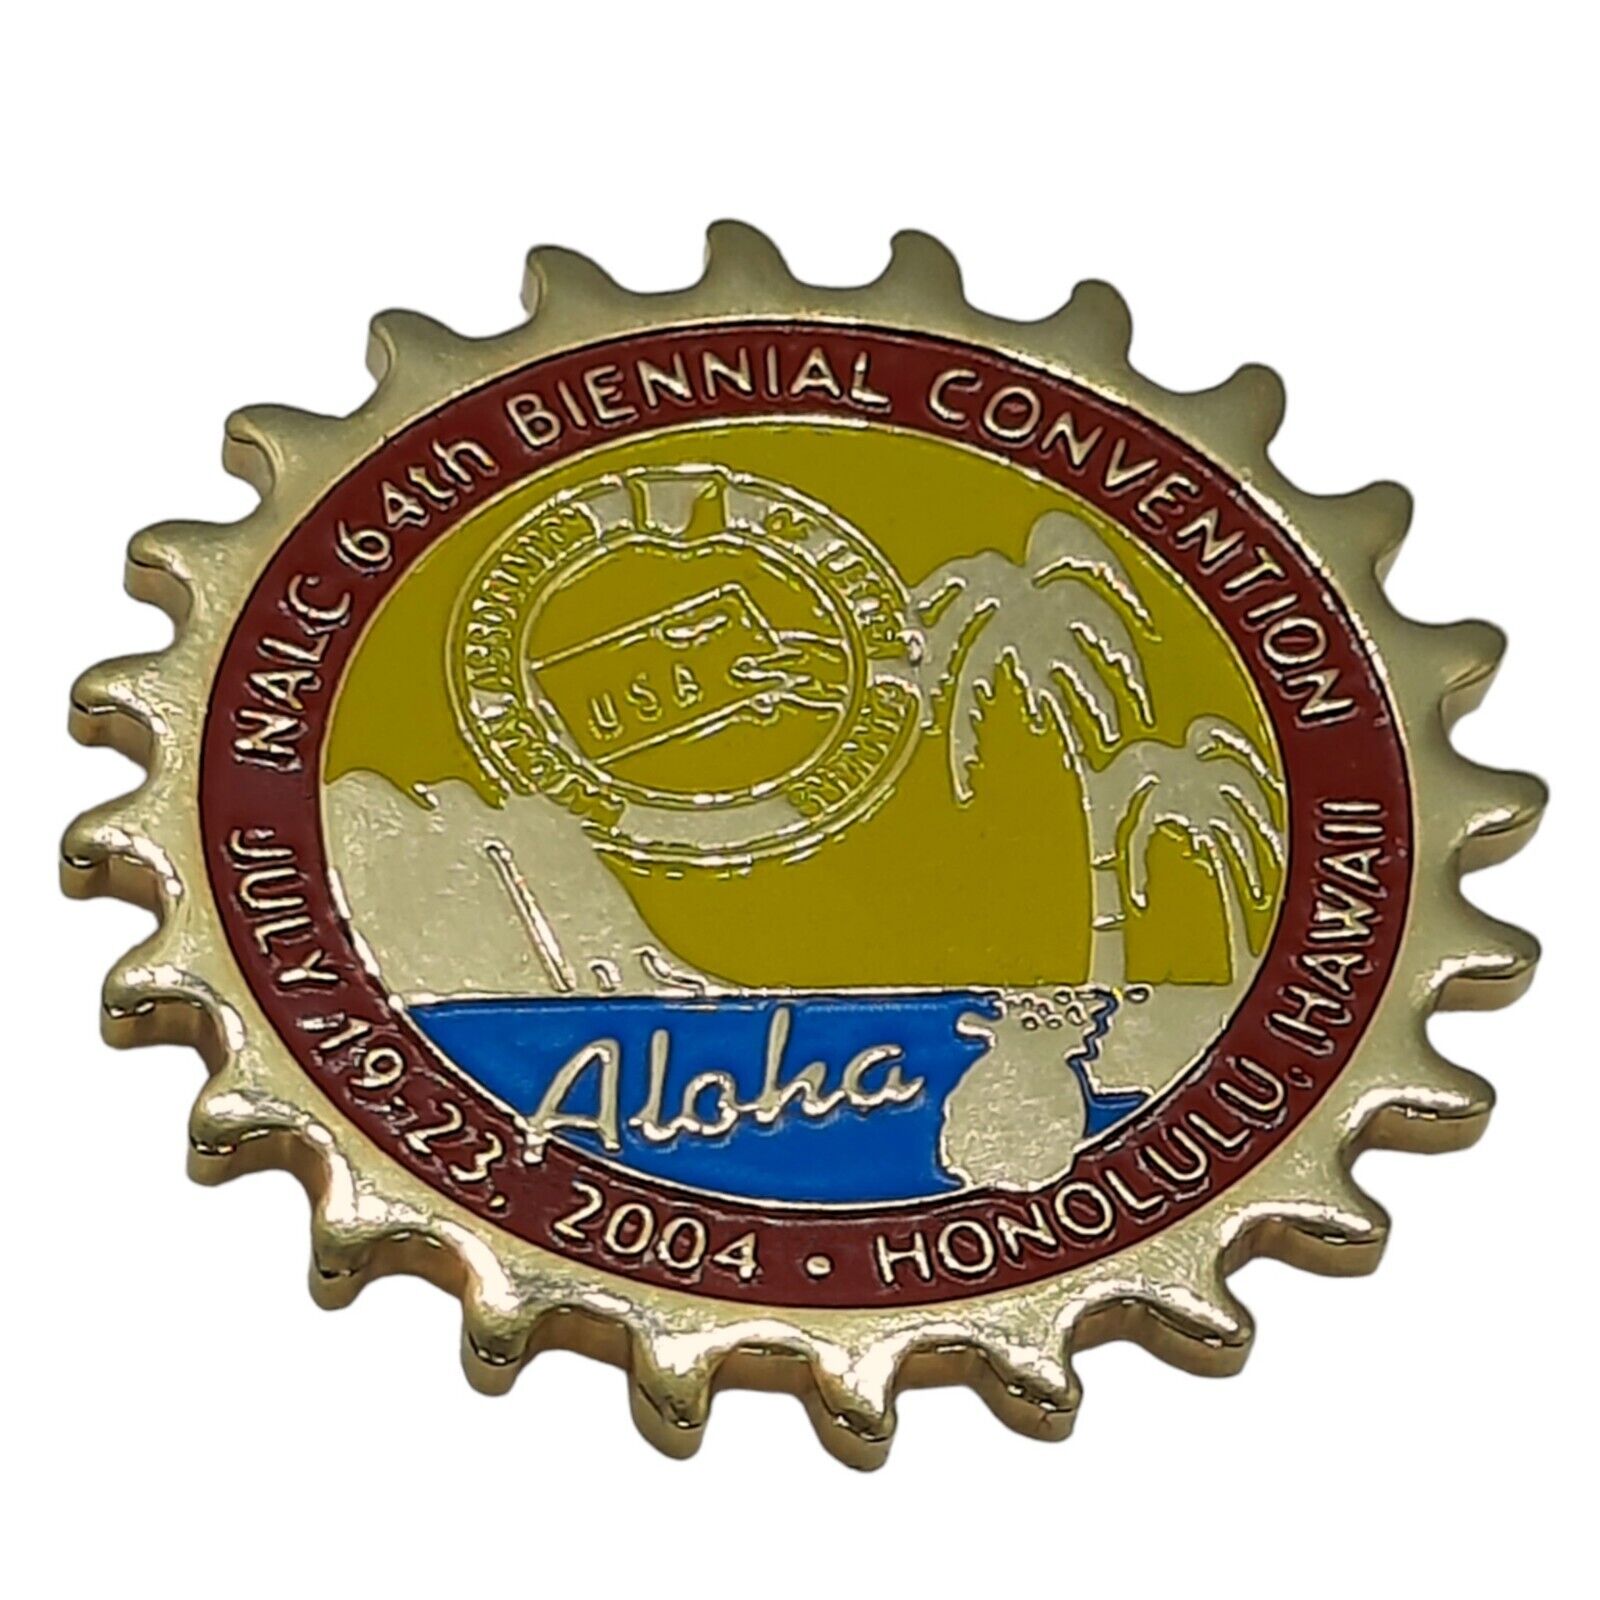 Vtg 2004 NALC Convention Lapel Pin Badge Honolulu Hawaii Aloha USPS Postal Union